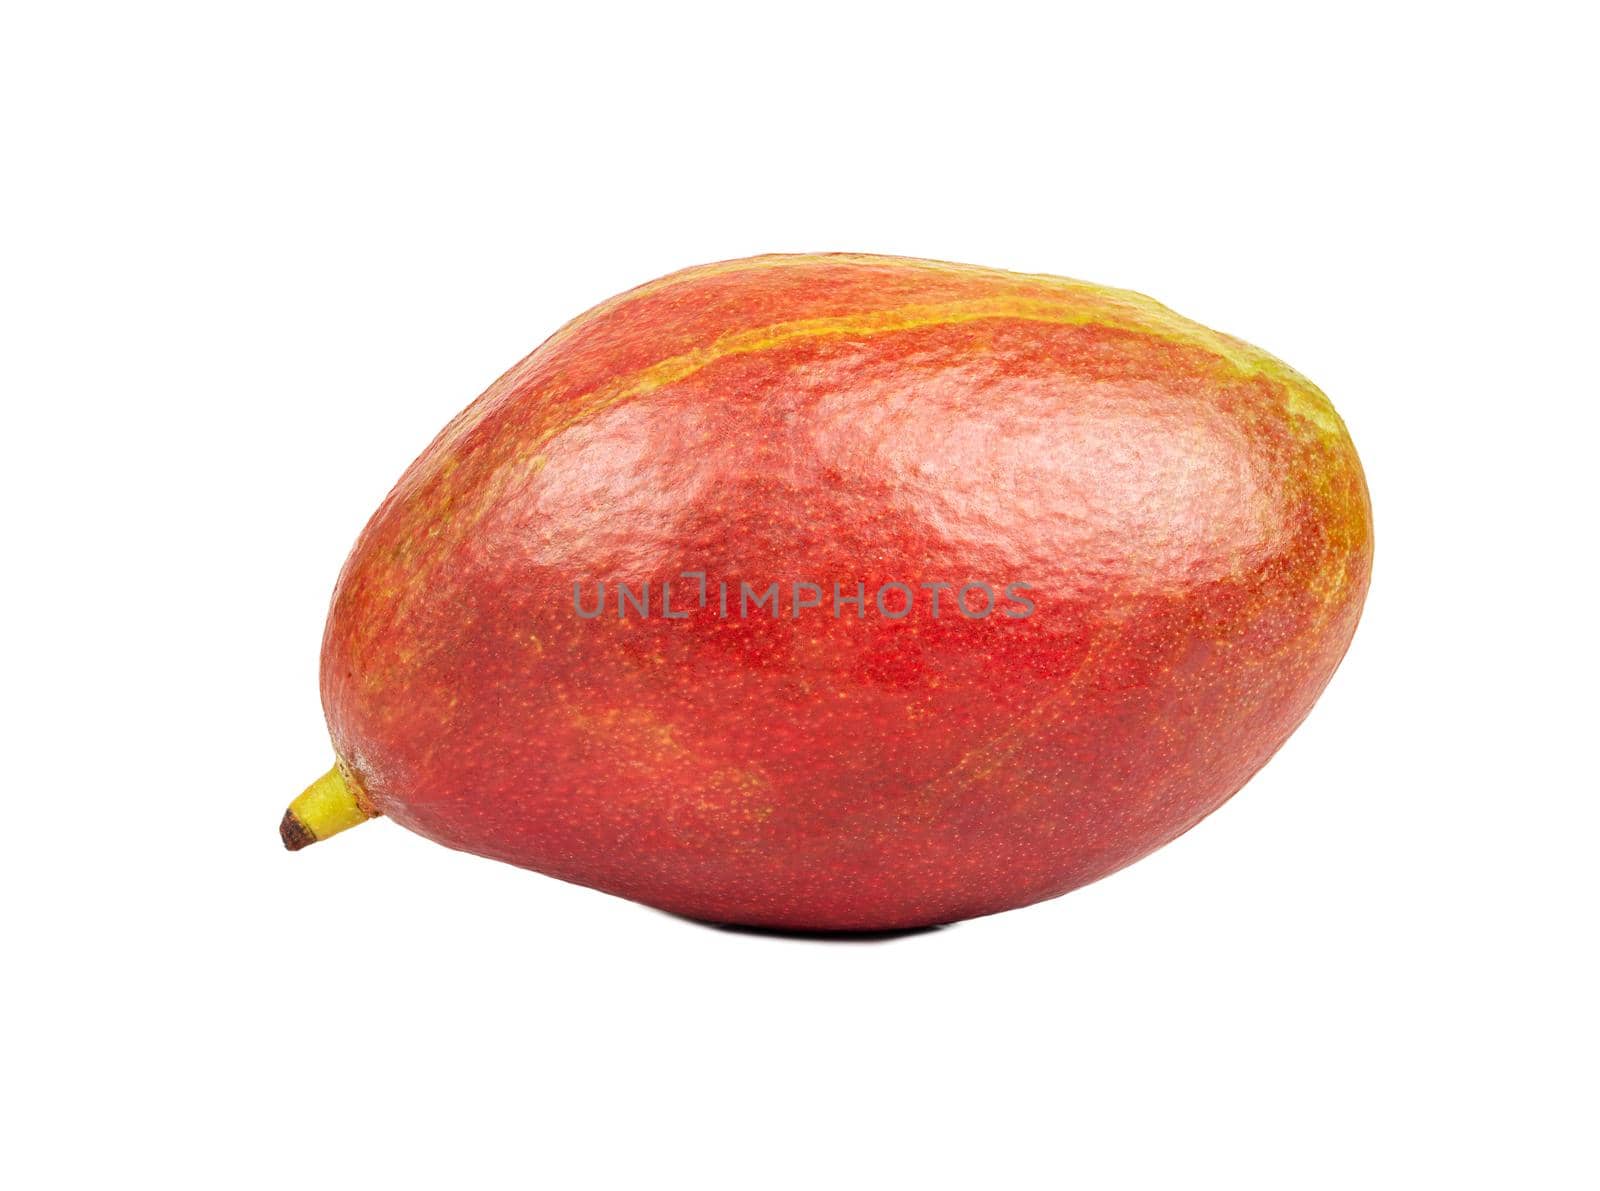 Delicious red mango fruit isolated on white background